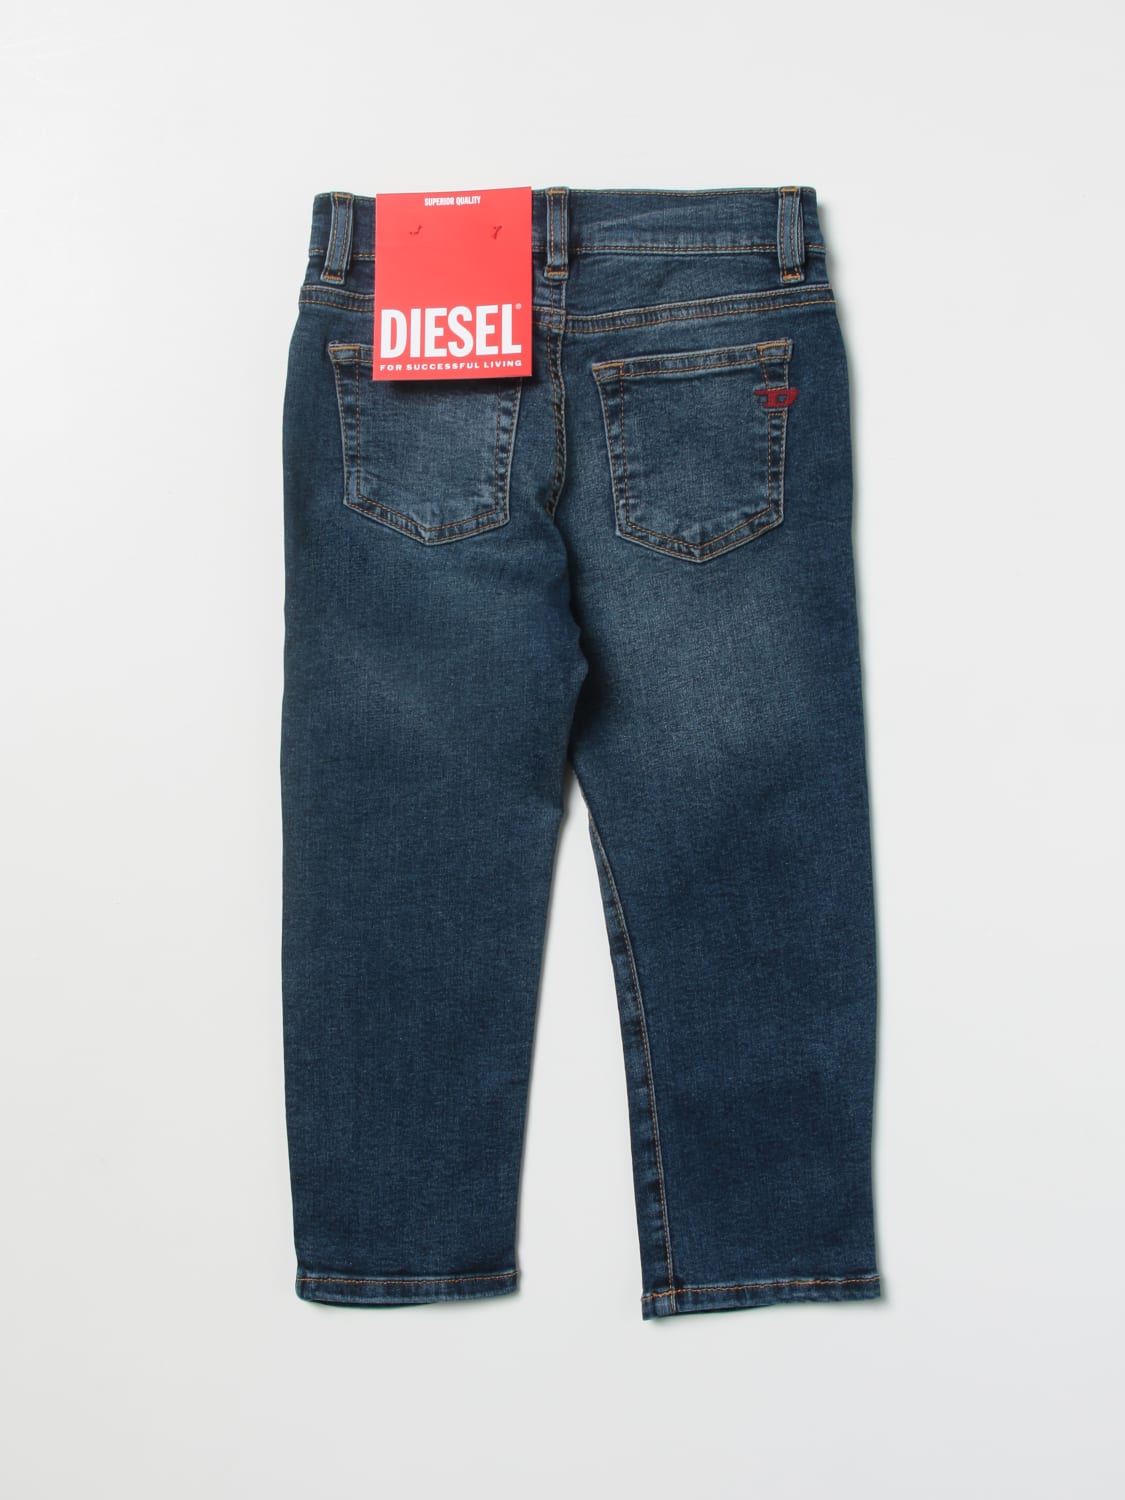 Diesel Outlet: jeans for boys - Denim Diesel jeans J00809KXBD1 online on GIGLIO.COM